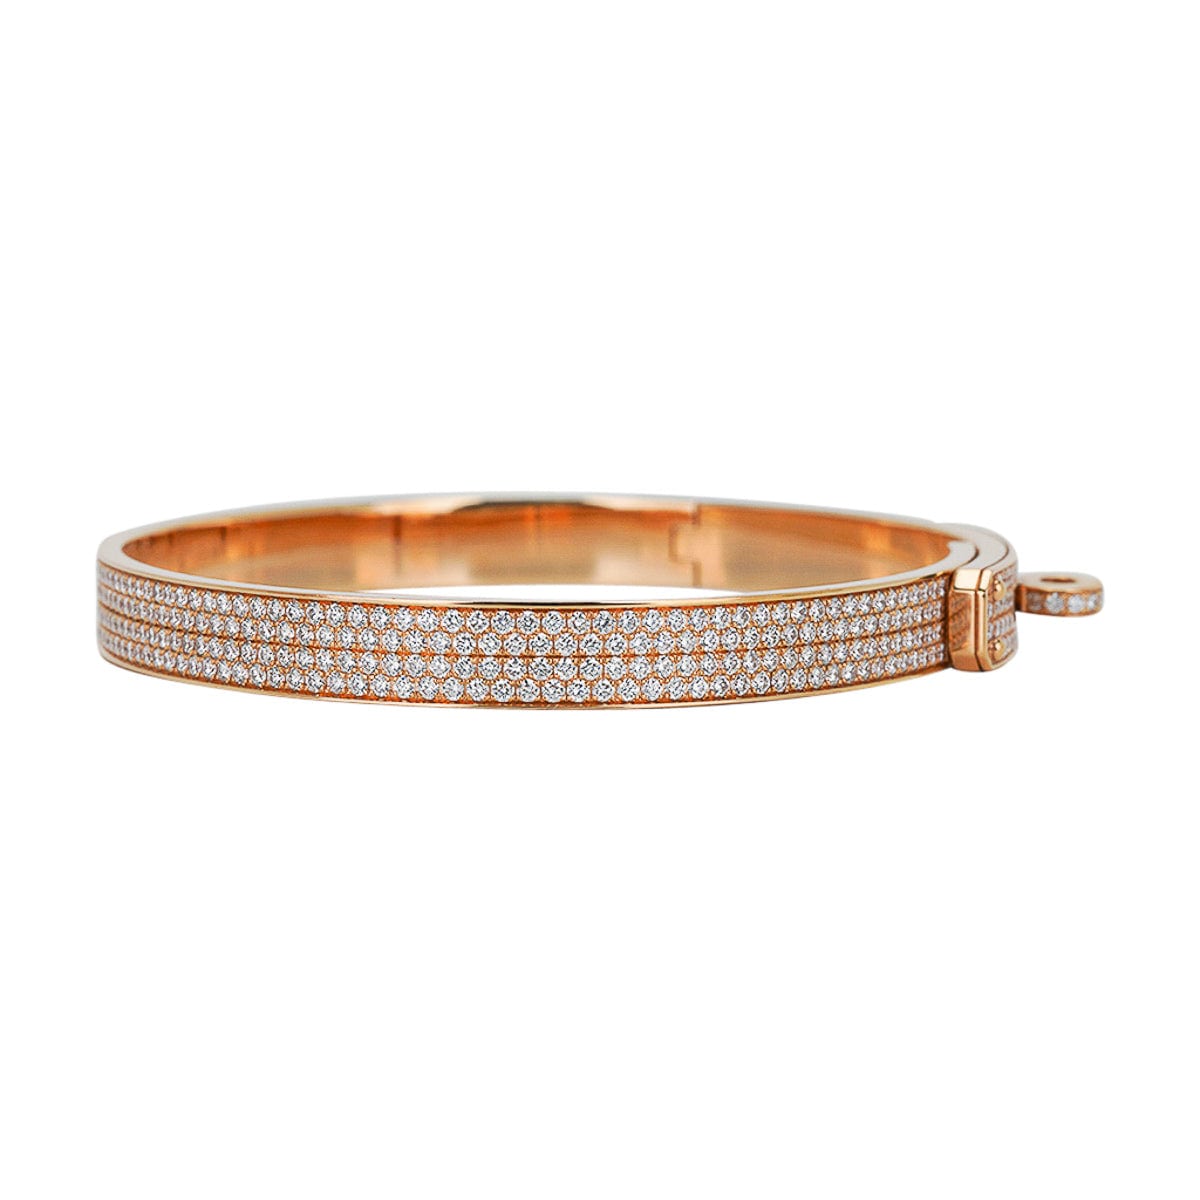 Hermes Kelly Diamond Bracelet 18k Yellow Gold 539 Diamonds Size Small